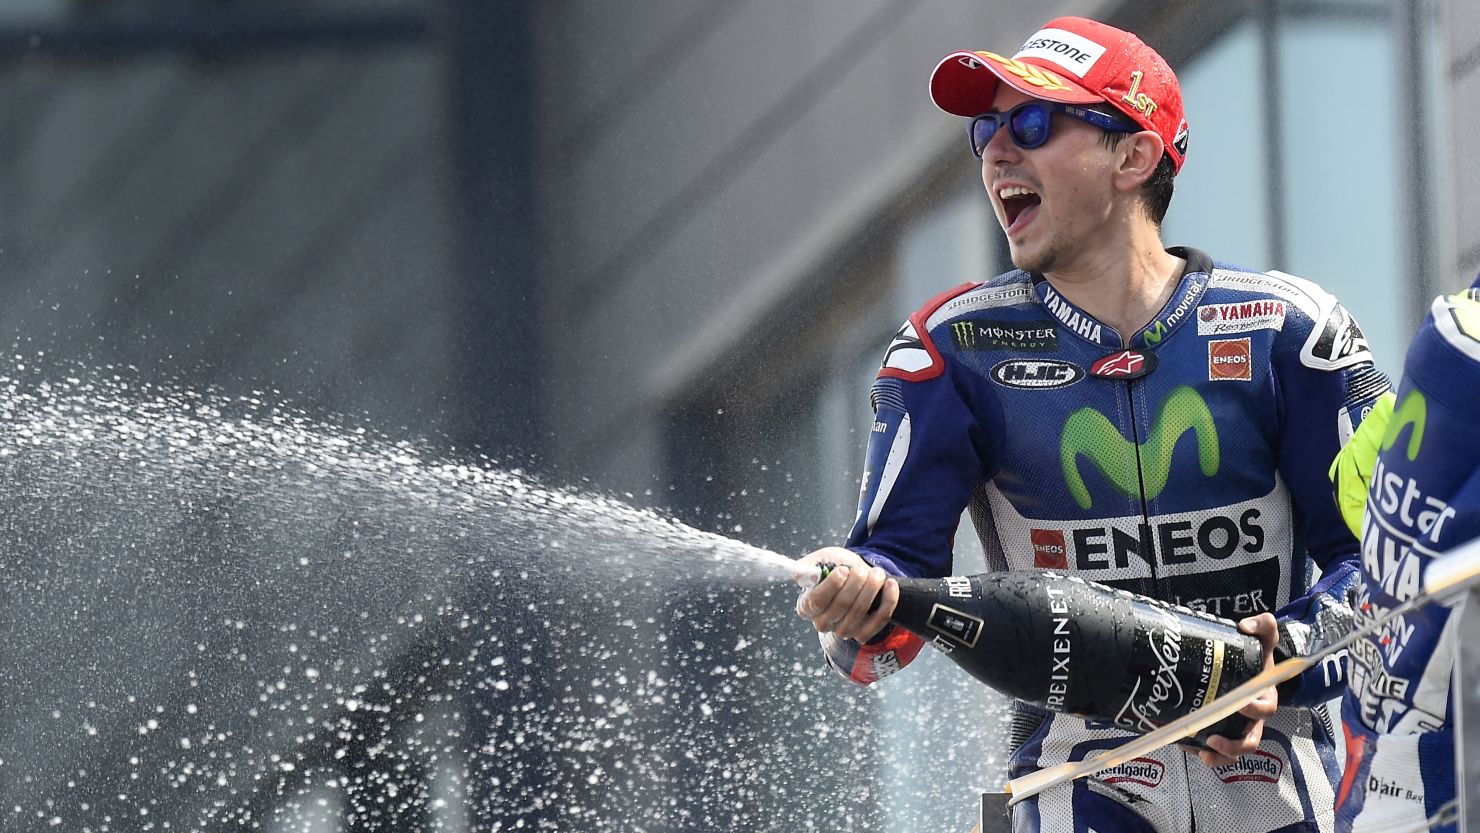 Jorge Lorenzo claimed his sixth MotoGP win of the season at Aragon.